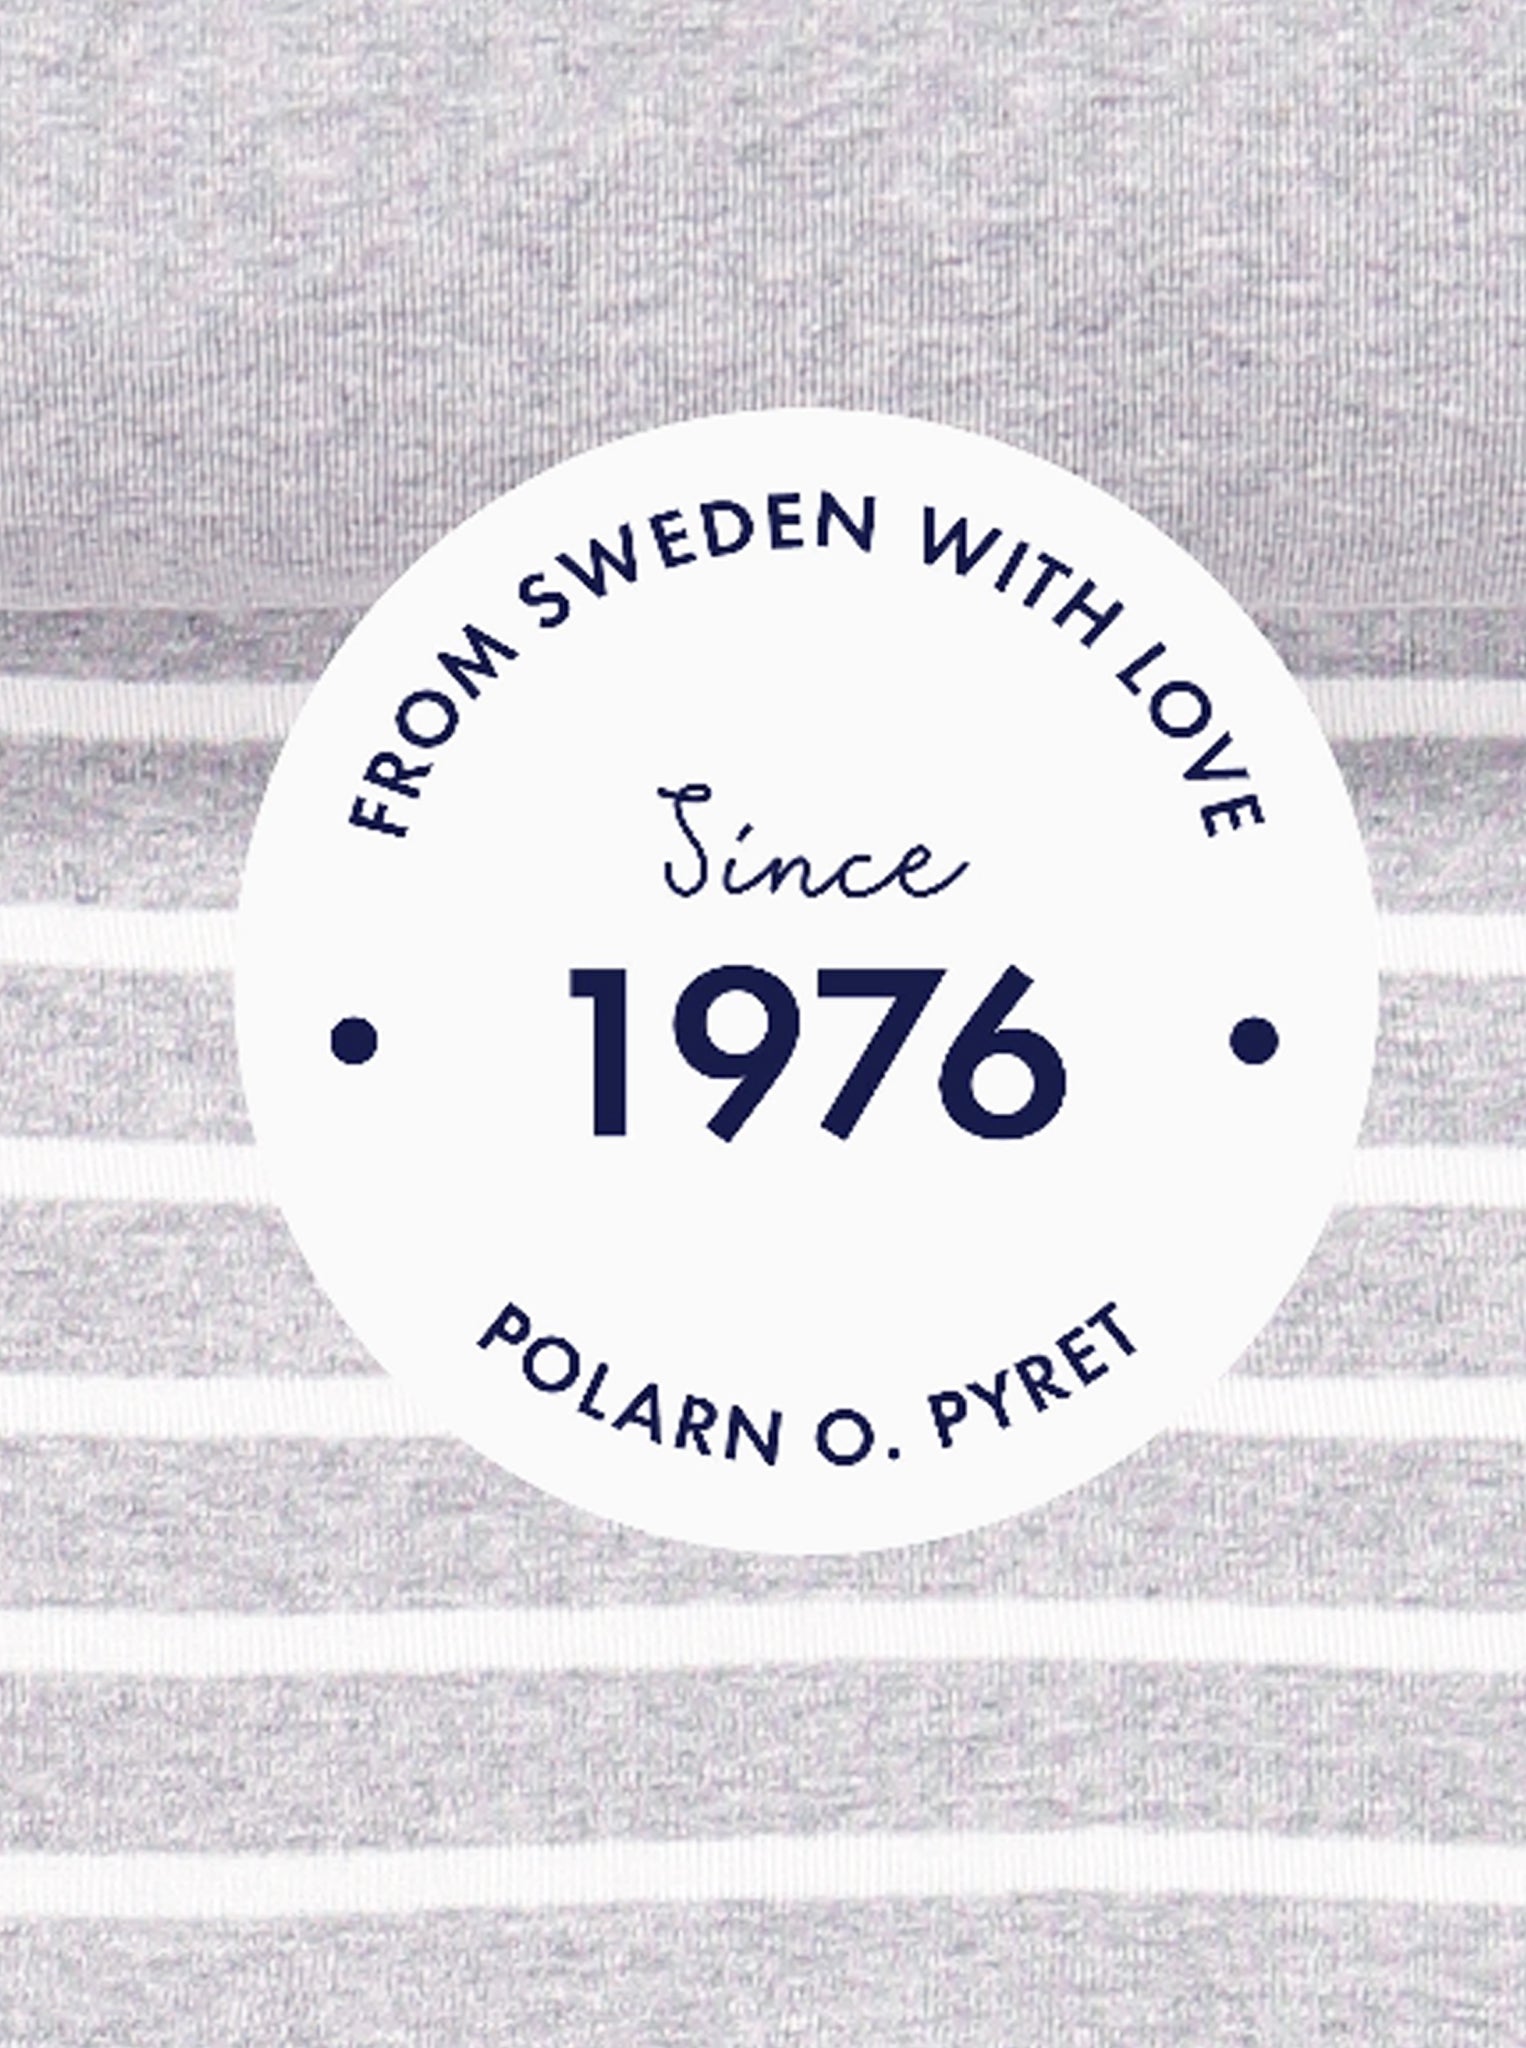 polarn o. pyret 1976 logo in grey 